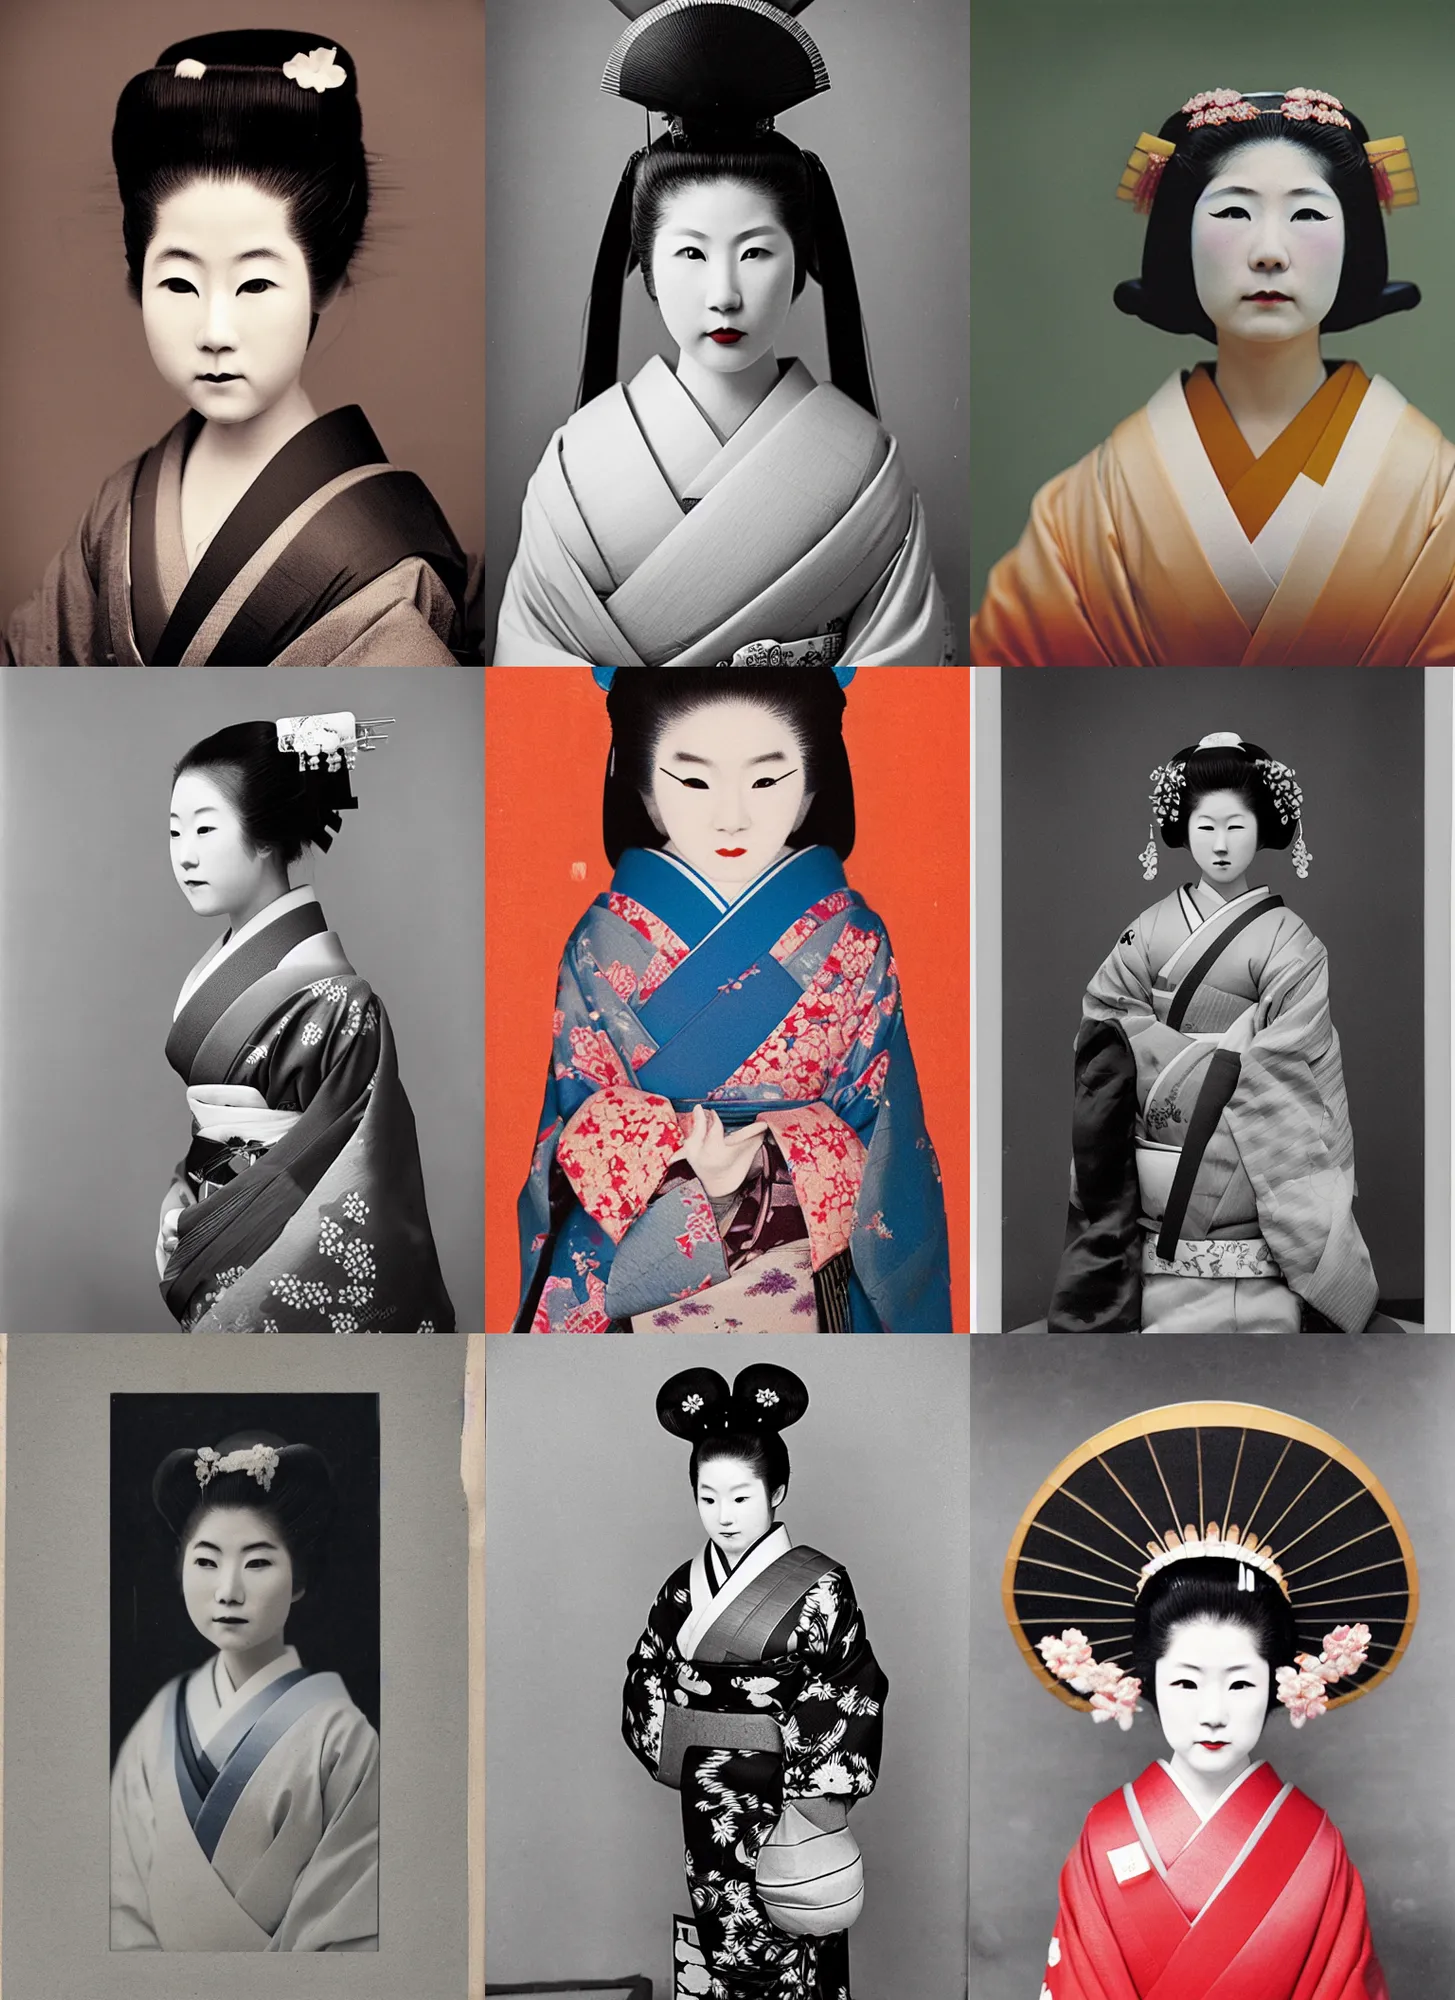 Prompt: Portrait Photograph of a Japanese Geisha Panatomic-X